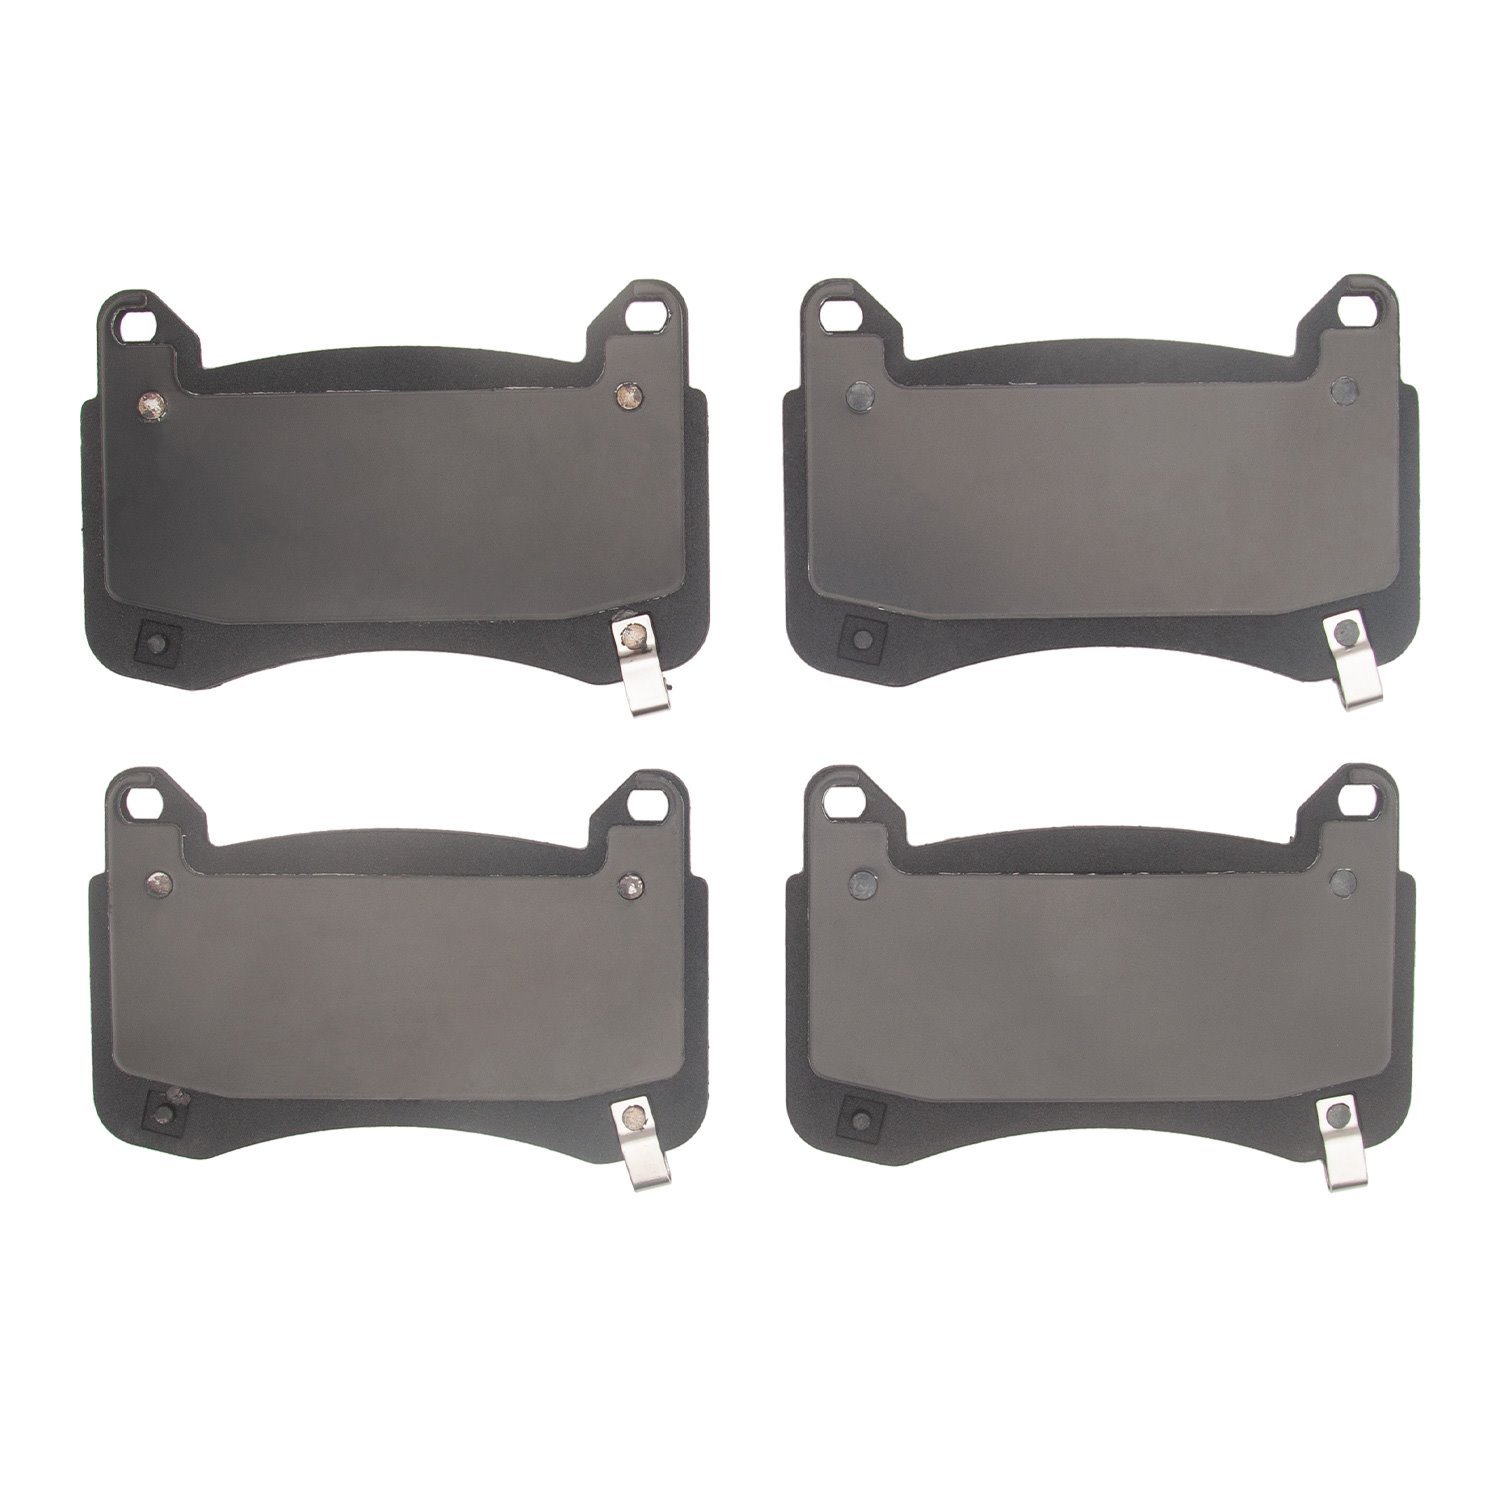 1551-2399-00 5000 Advanced Ceramic Brake Pads, Fits Select Tesla, Position: Front